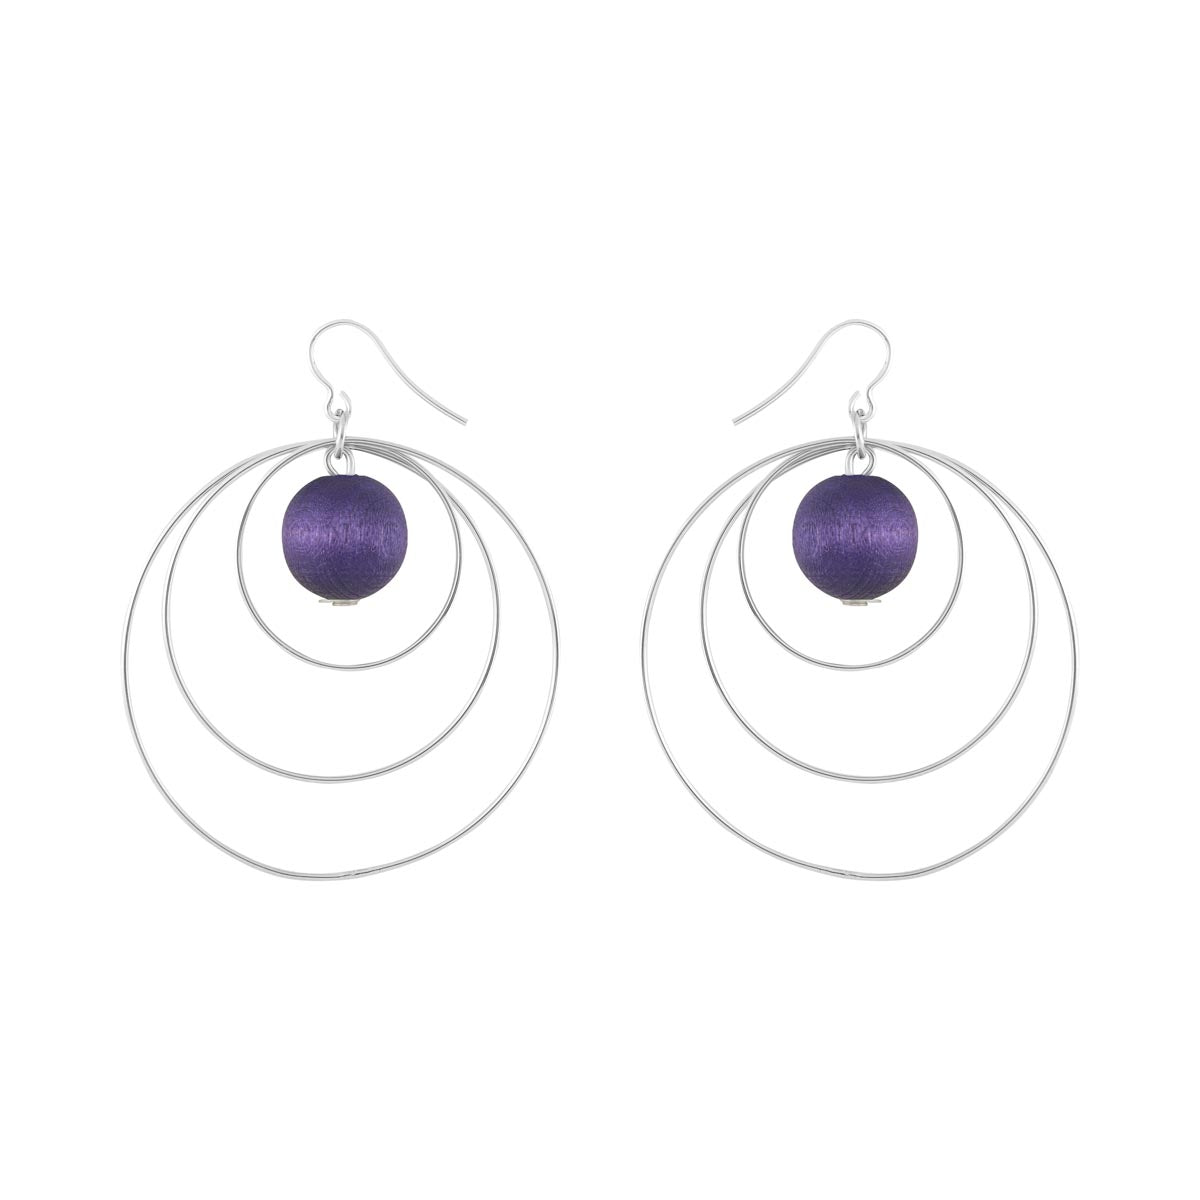 Piruetti earrings, dark purple